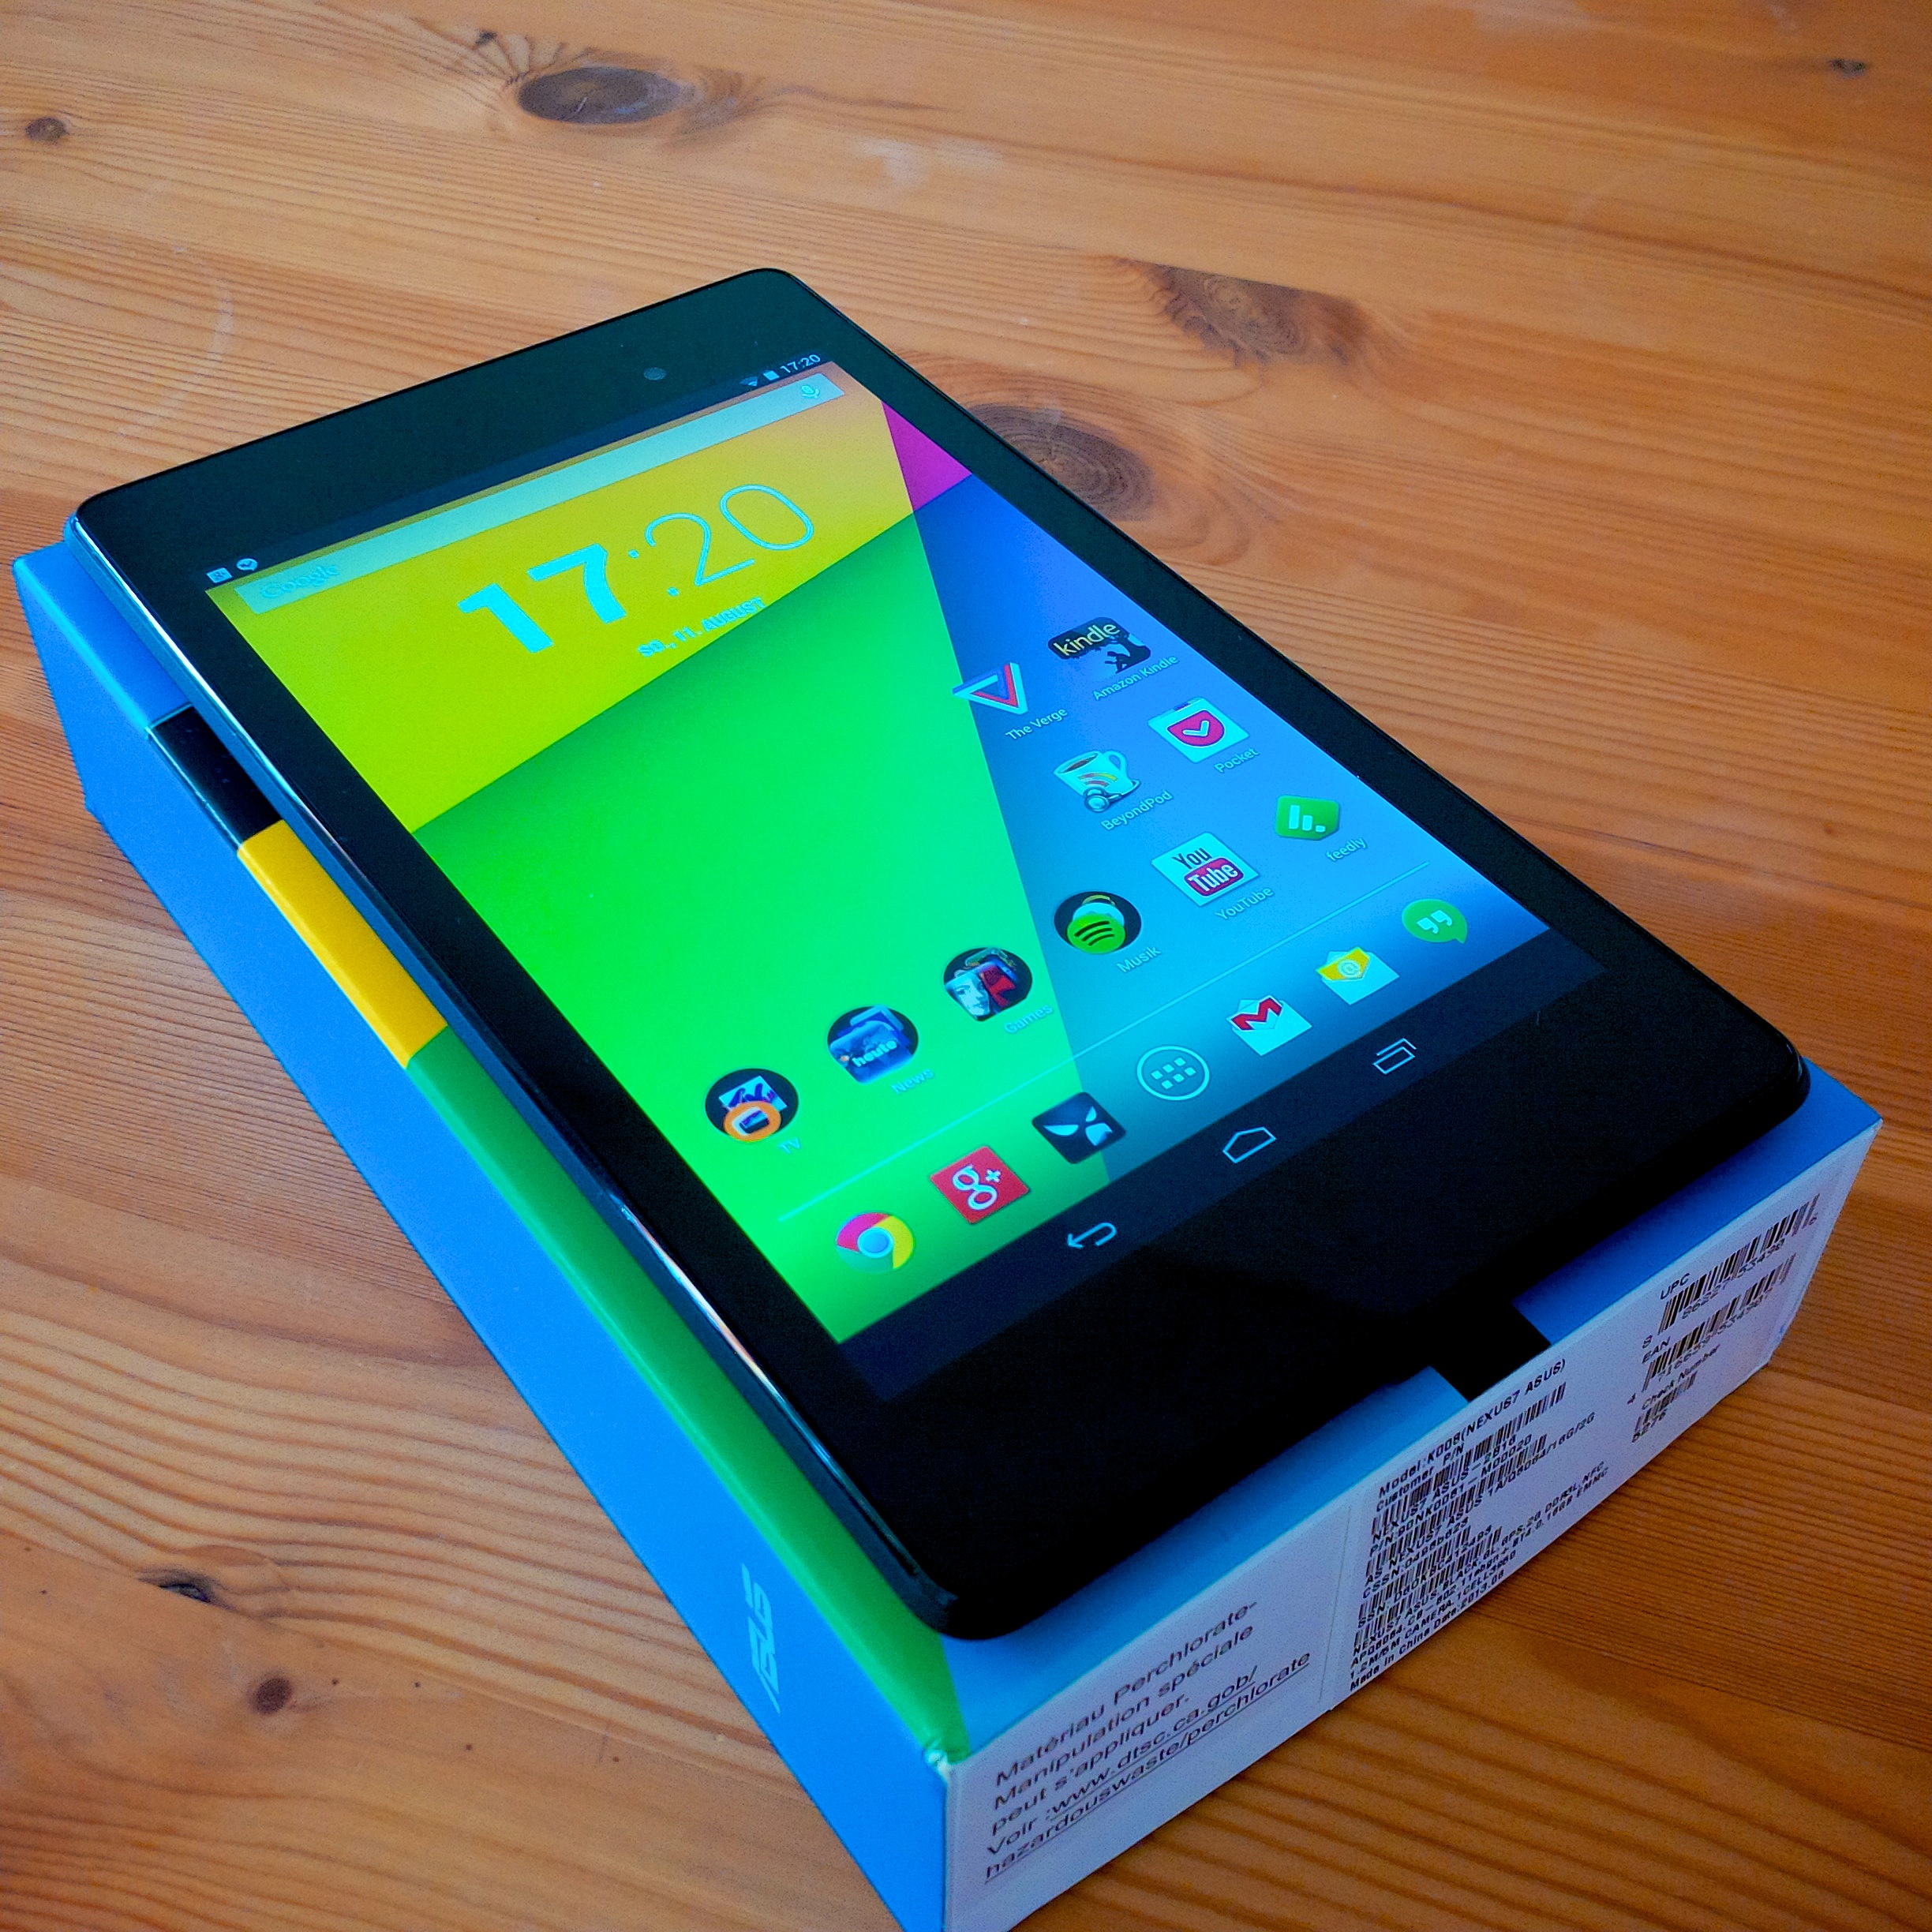 Das neue Google Nexus 7